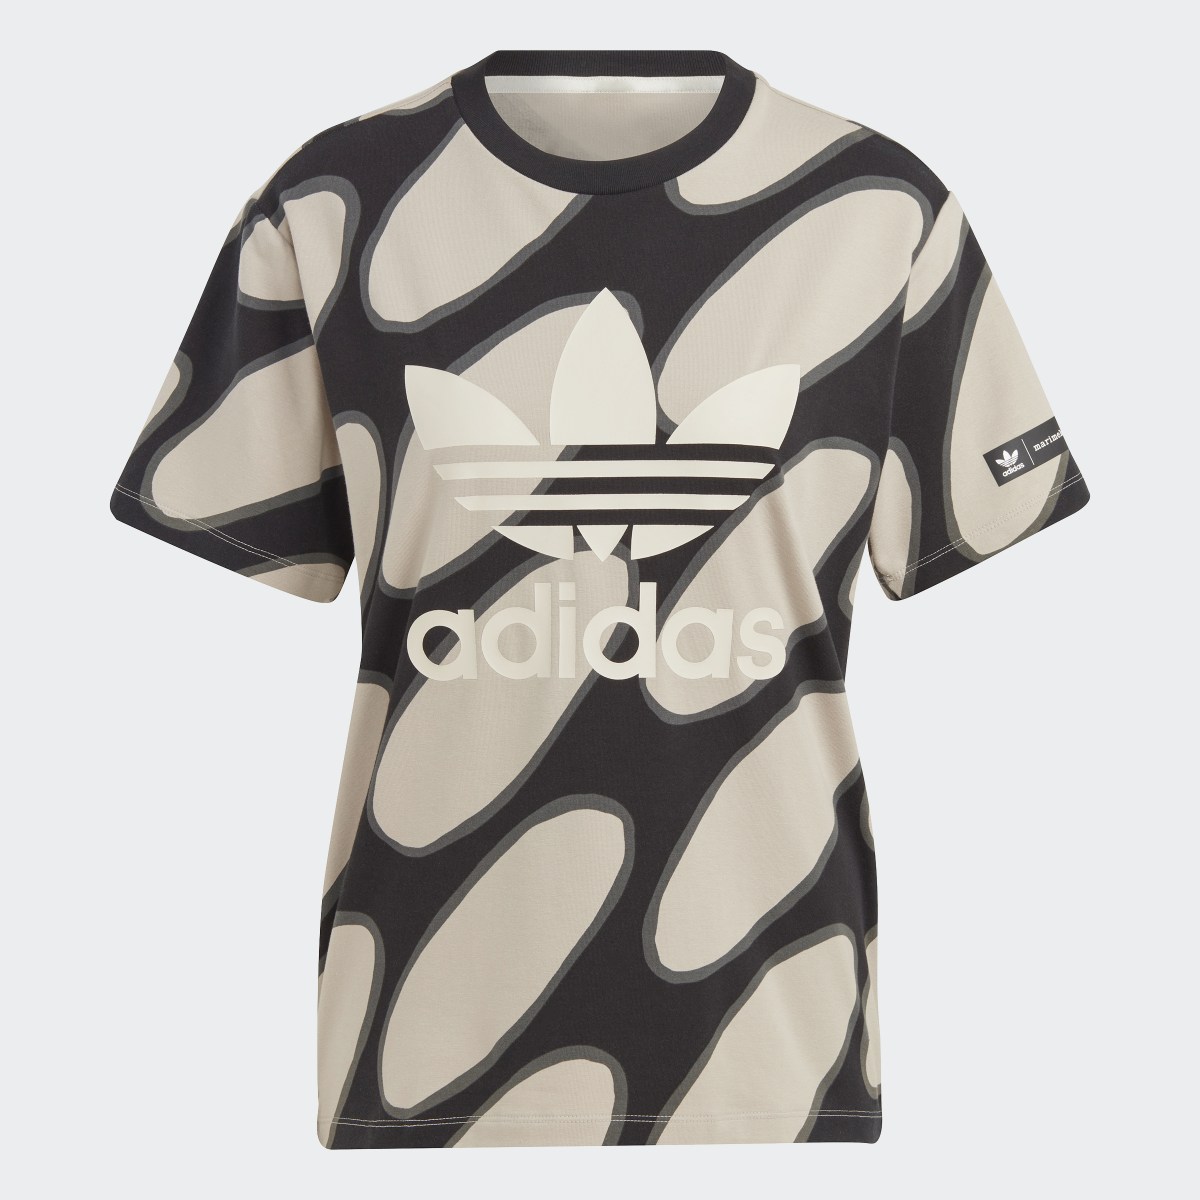 Adidas Marimekko Allover Print Shirt. 5